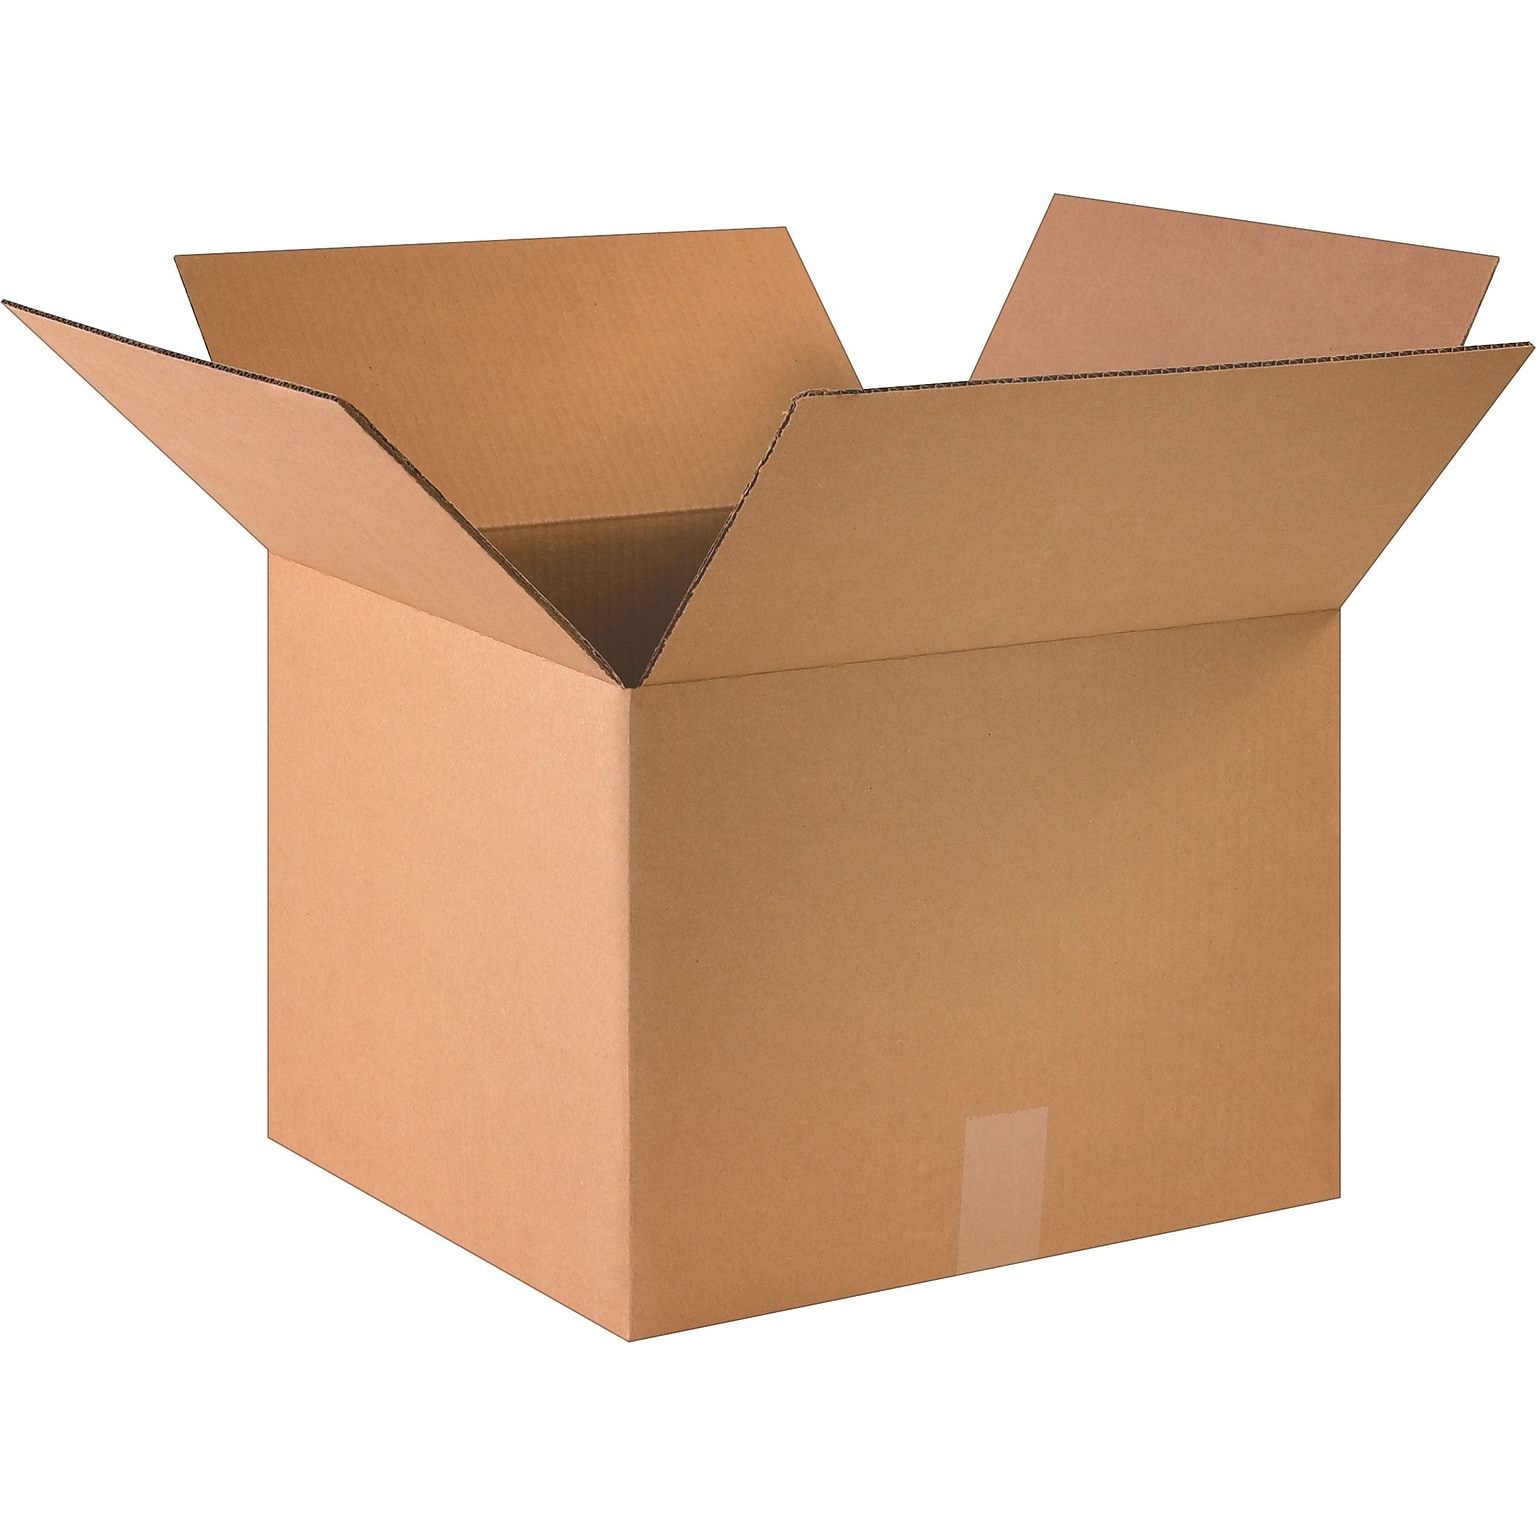 16 x 16 x 12 Shipping Boxes, 32 ECT, Brown, 25/Bundle (161612)